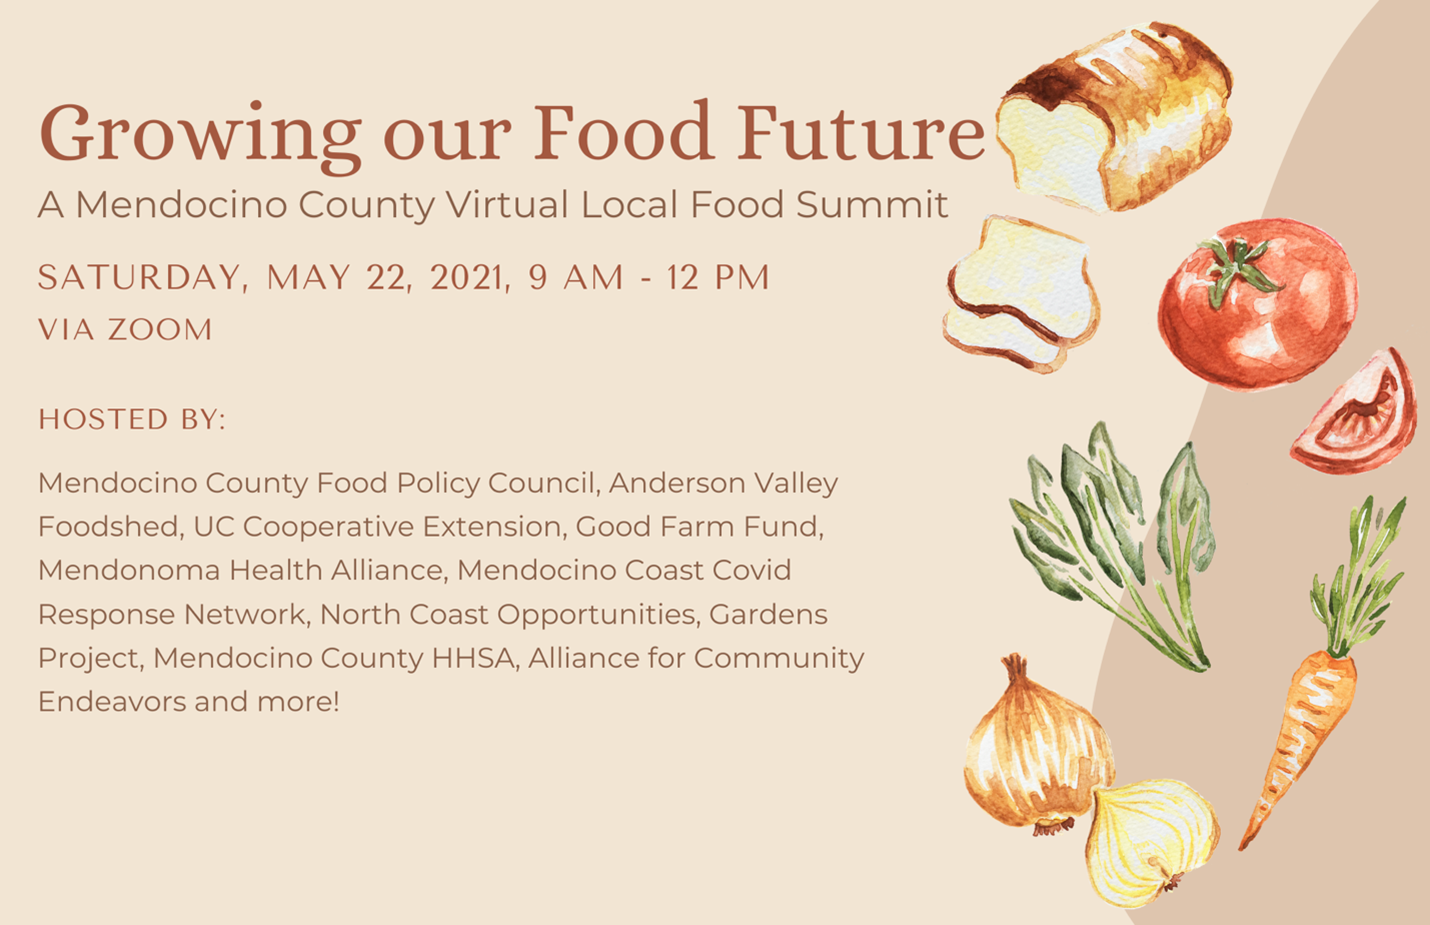 Mendocino County Local Food Summit